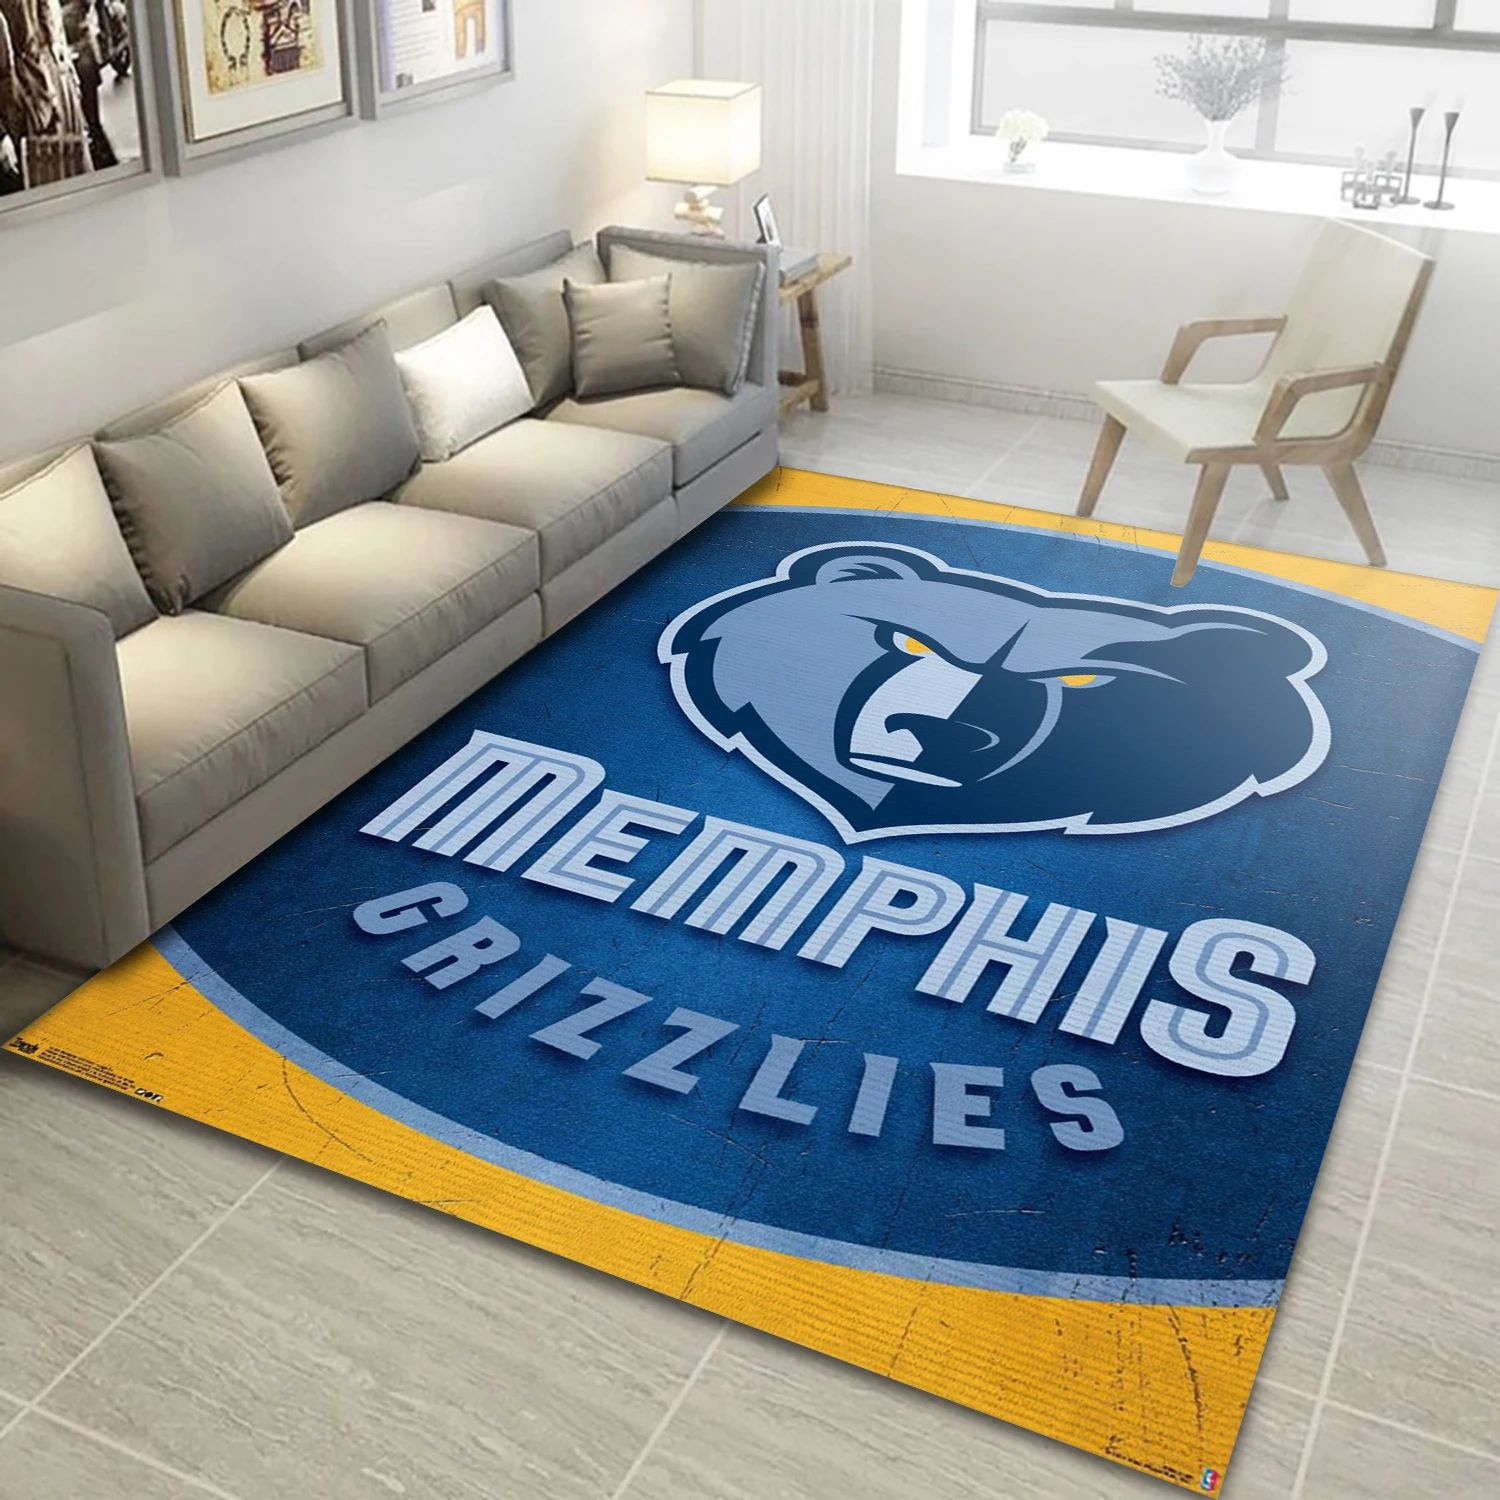 Memphis Grizzlies NBA Team Logos Area Rug, Living Room Rug - Home Decor - Indoor Outdoor Rugs